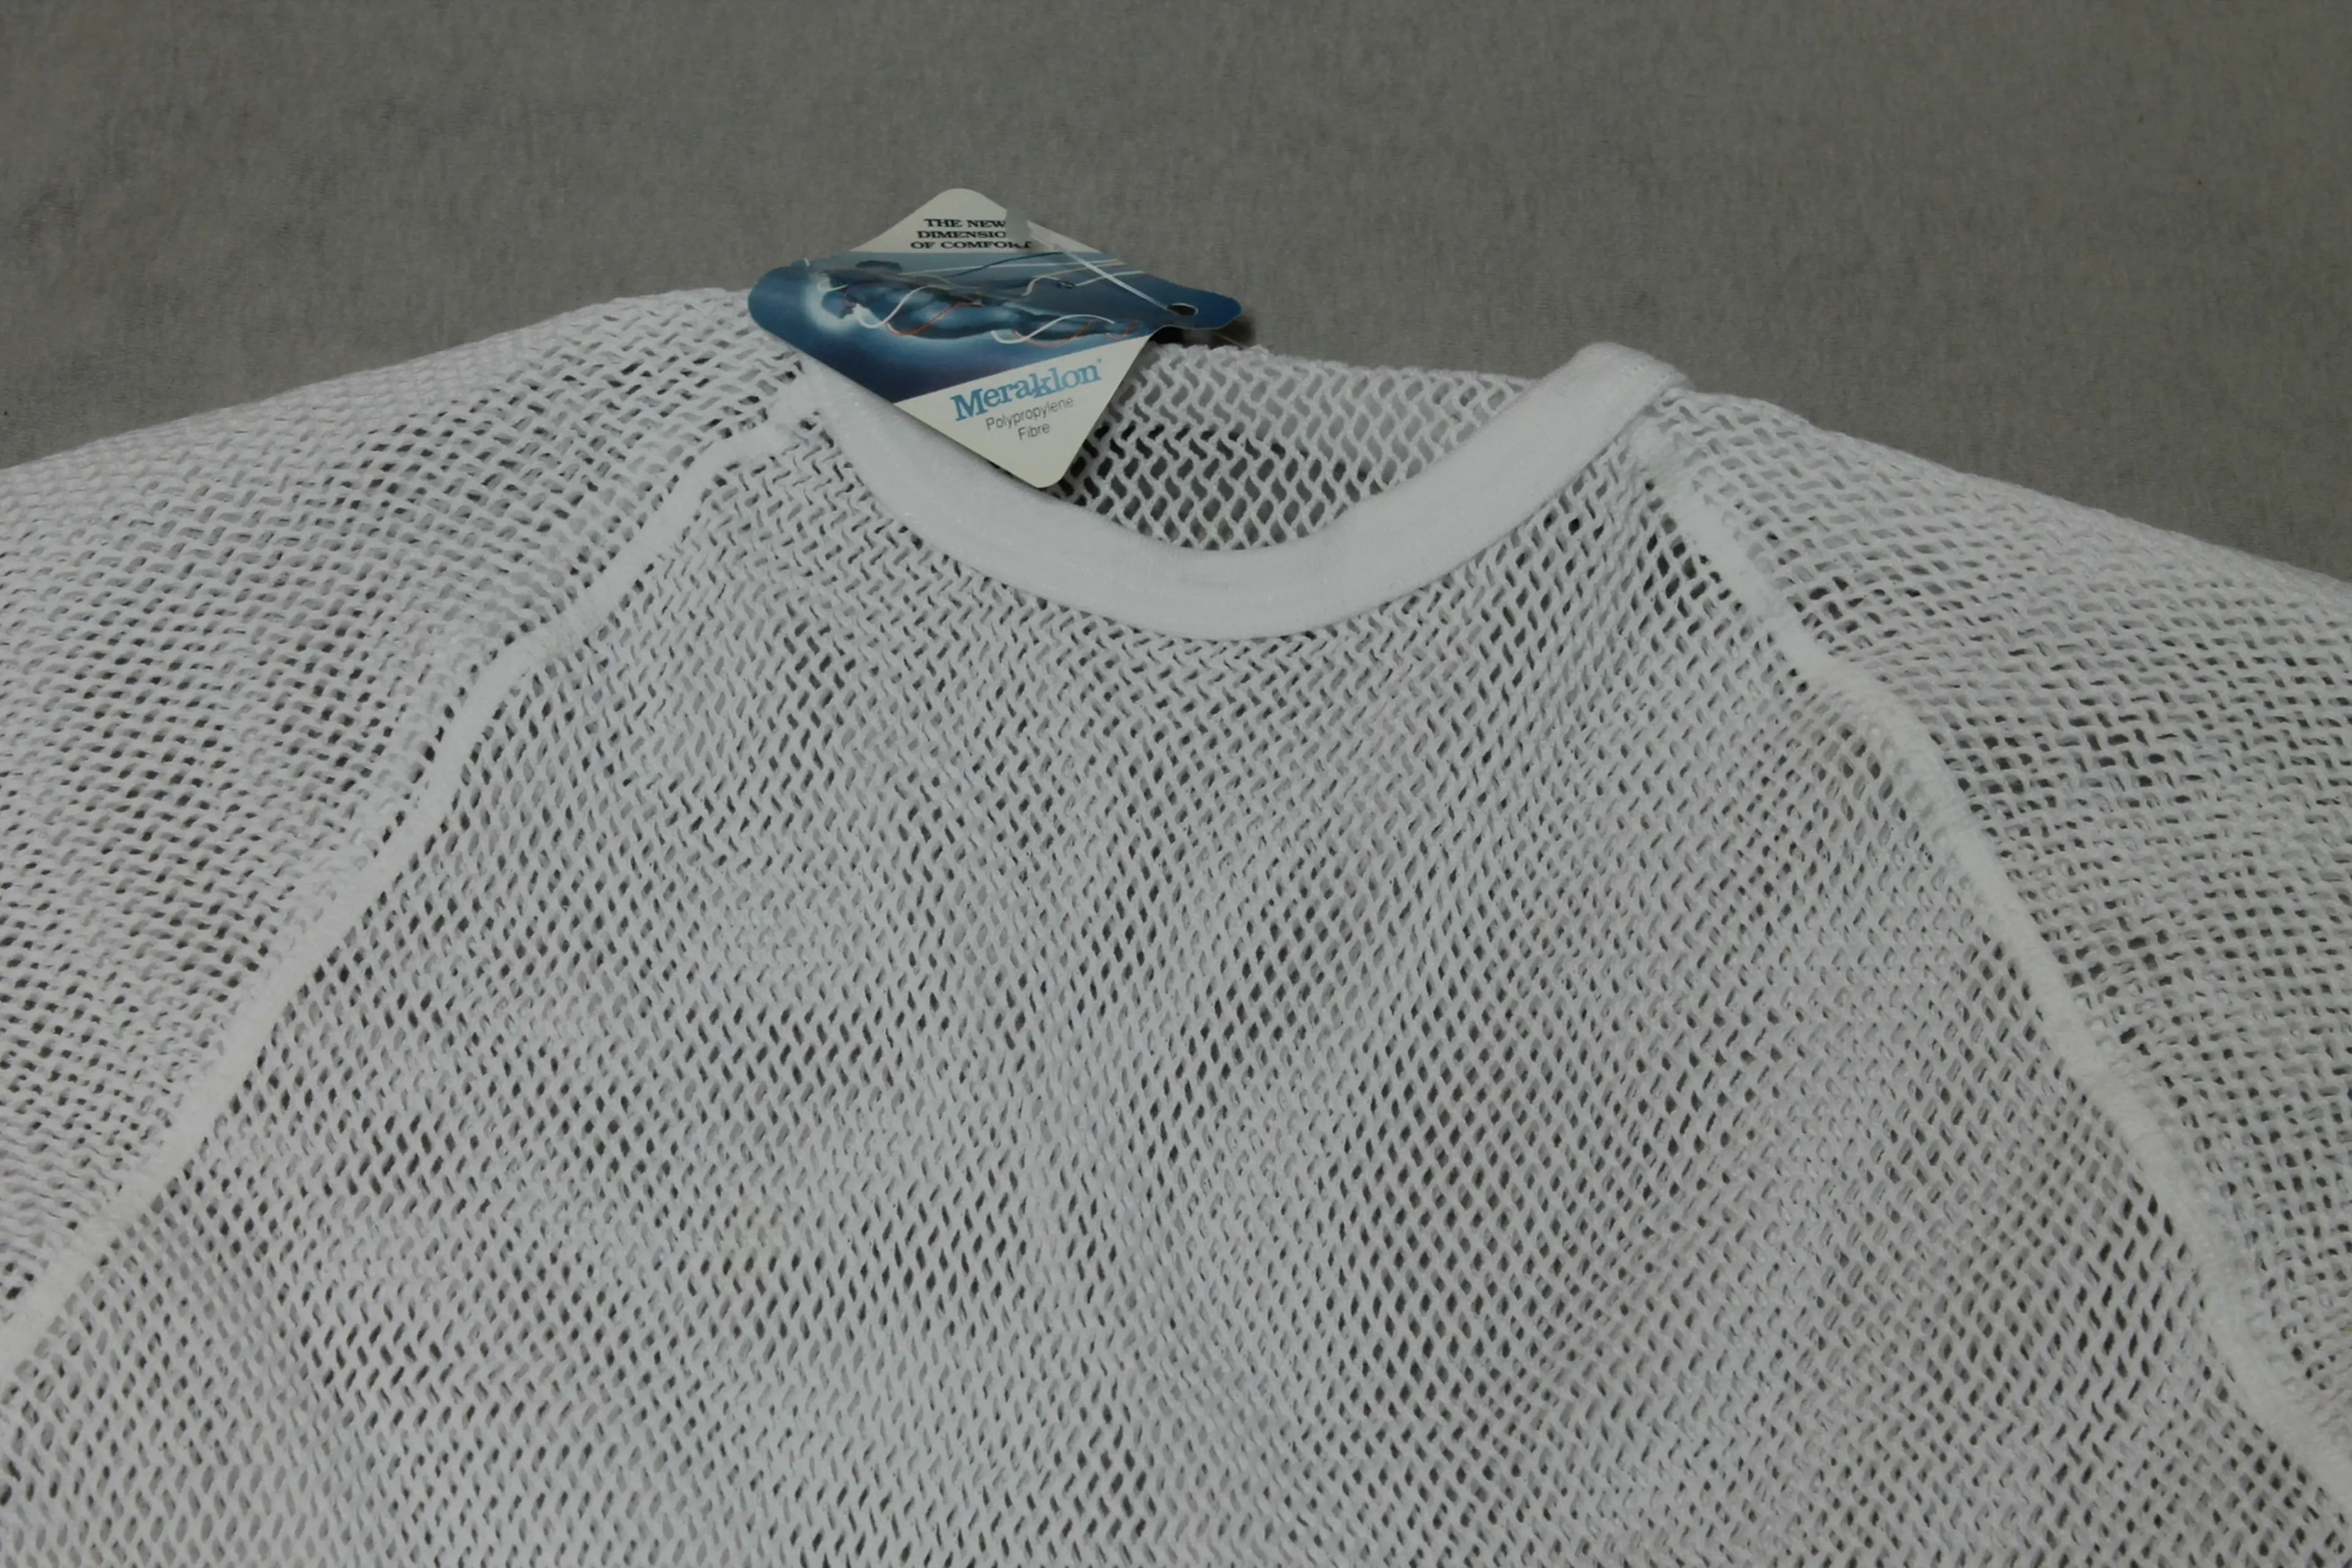 2. Tricou Dry Meraklon tricou cu plasa NOU marimi: S, L, XL